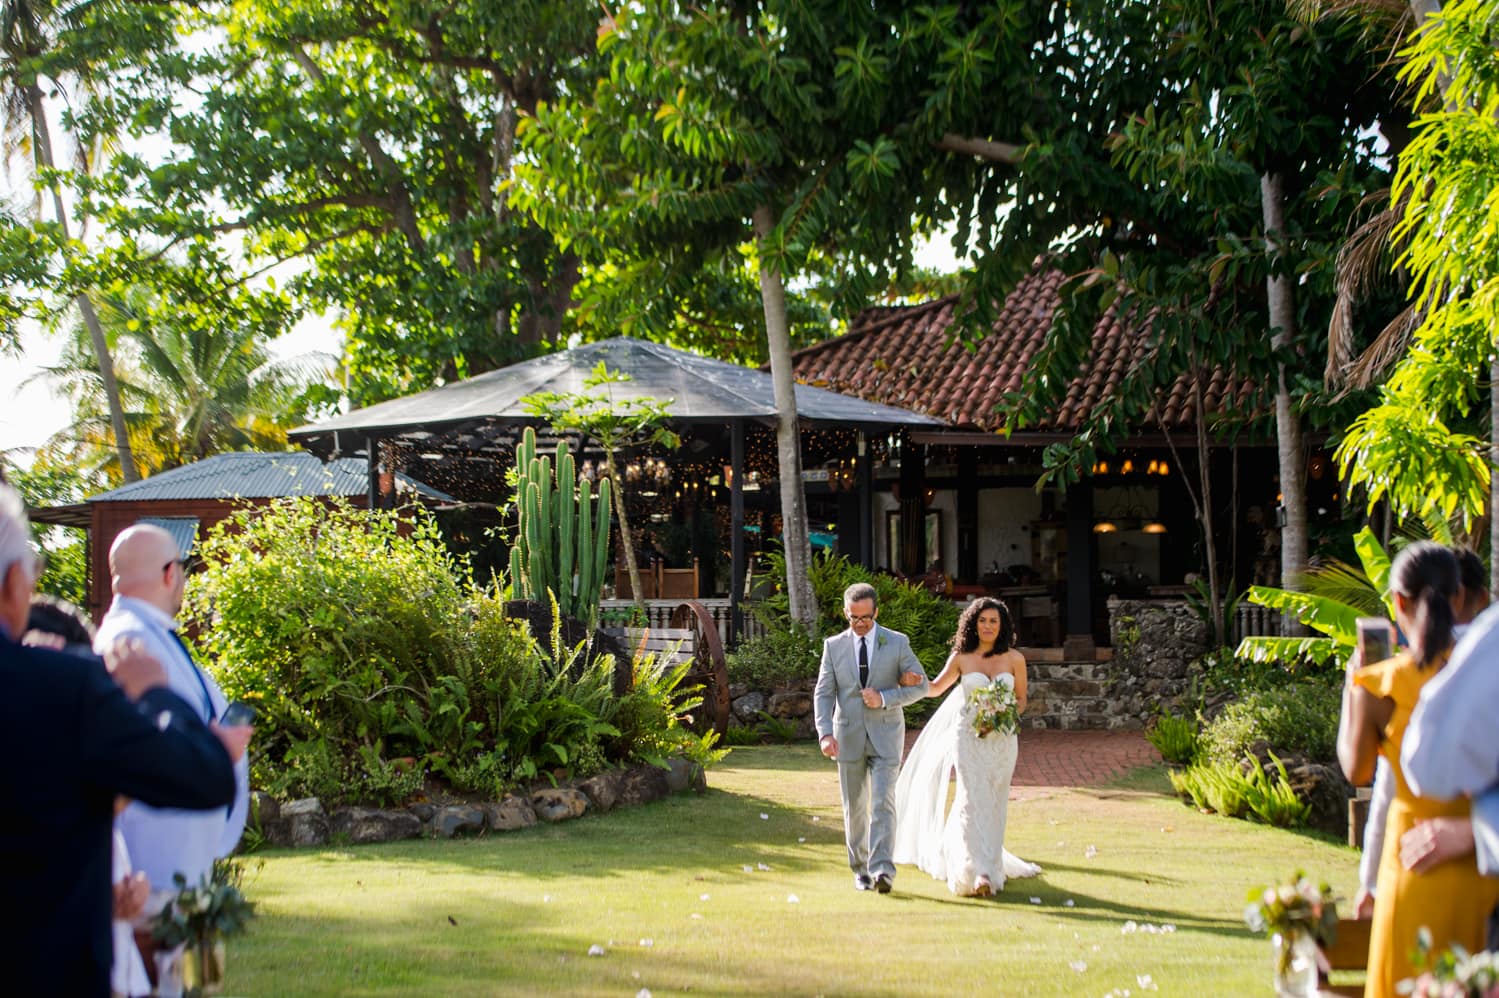 destination wedding photography at Hacienda Siesta Alegre in Puerto Rico by Camille Fontanez